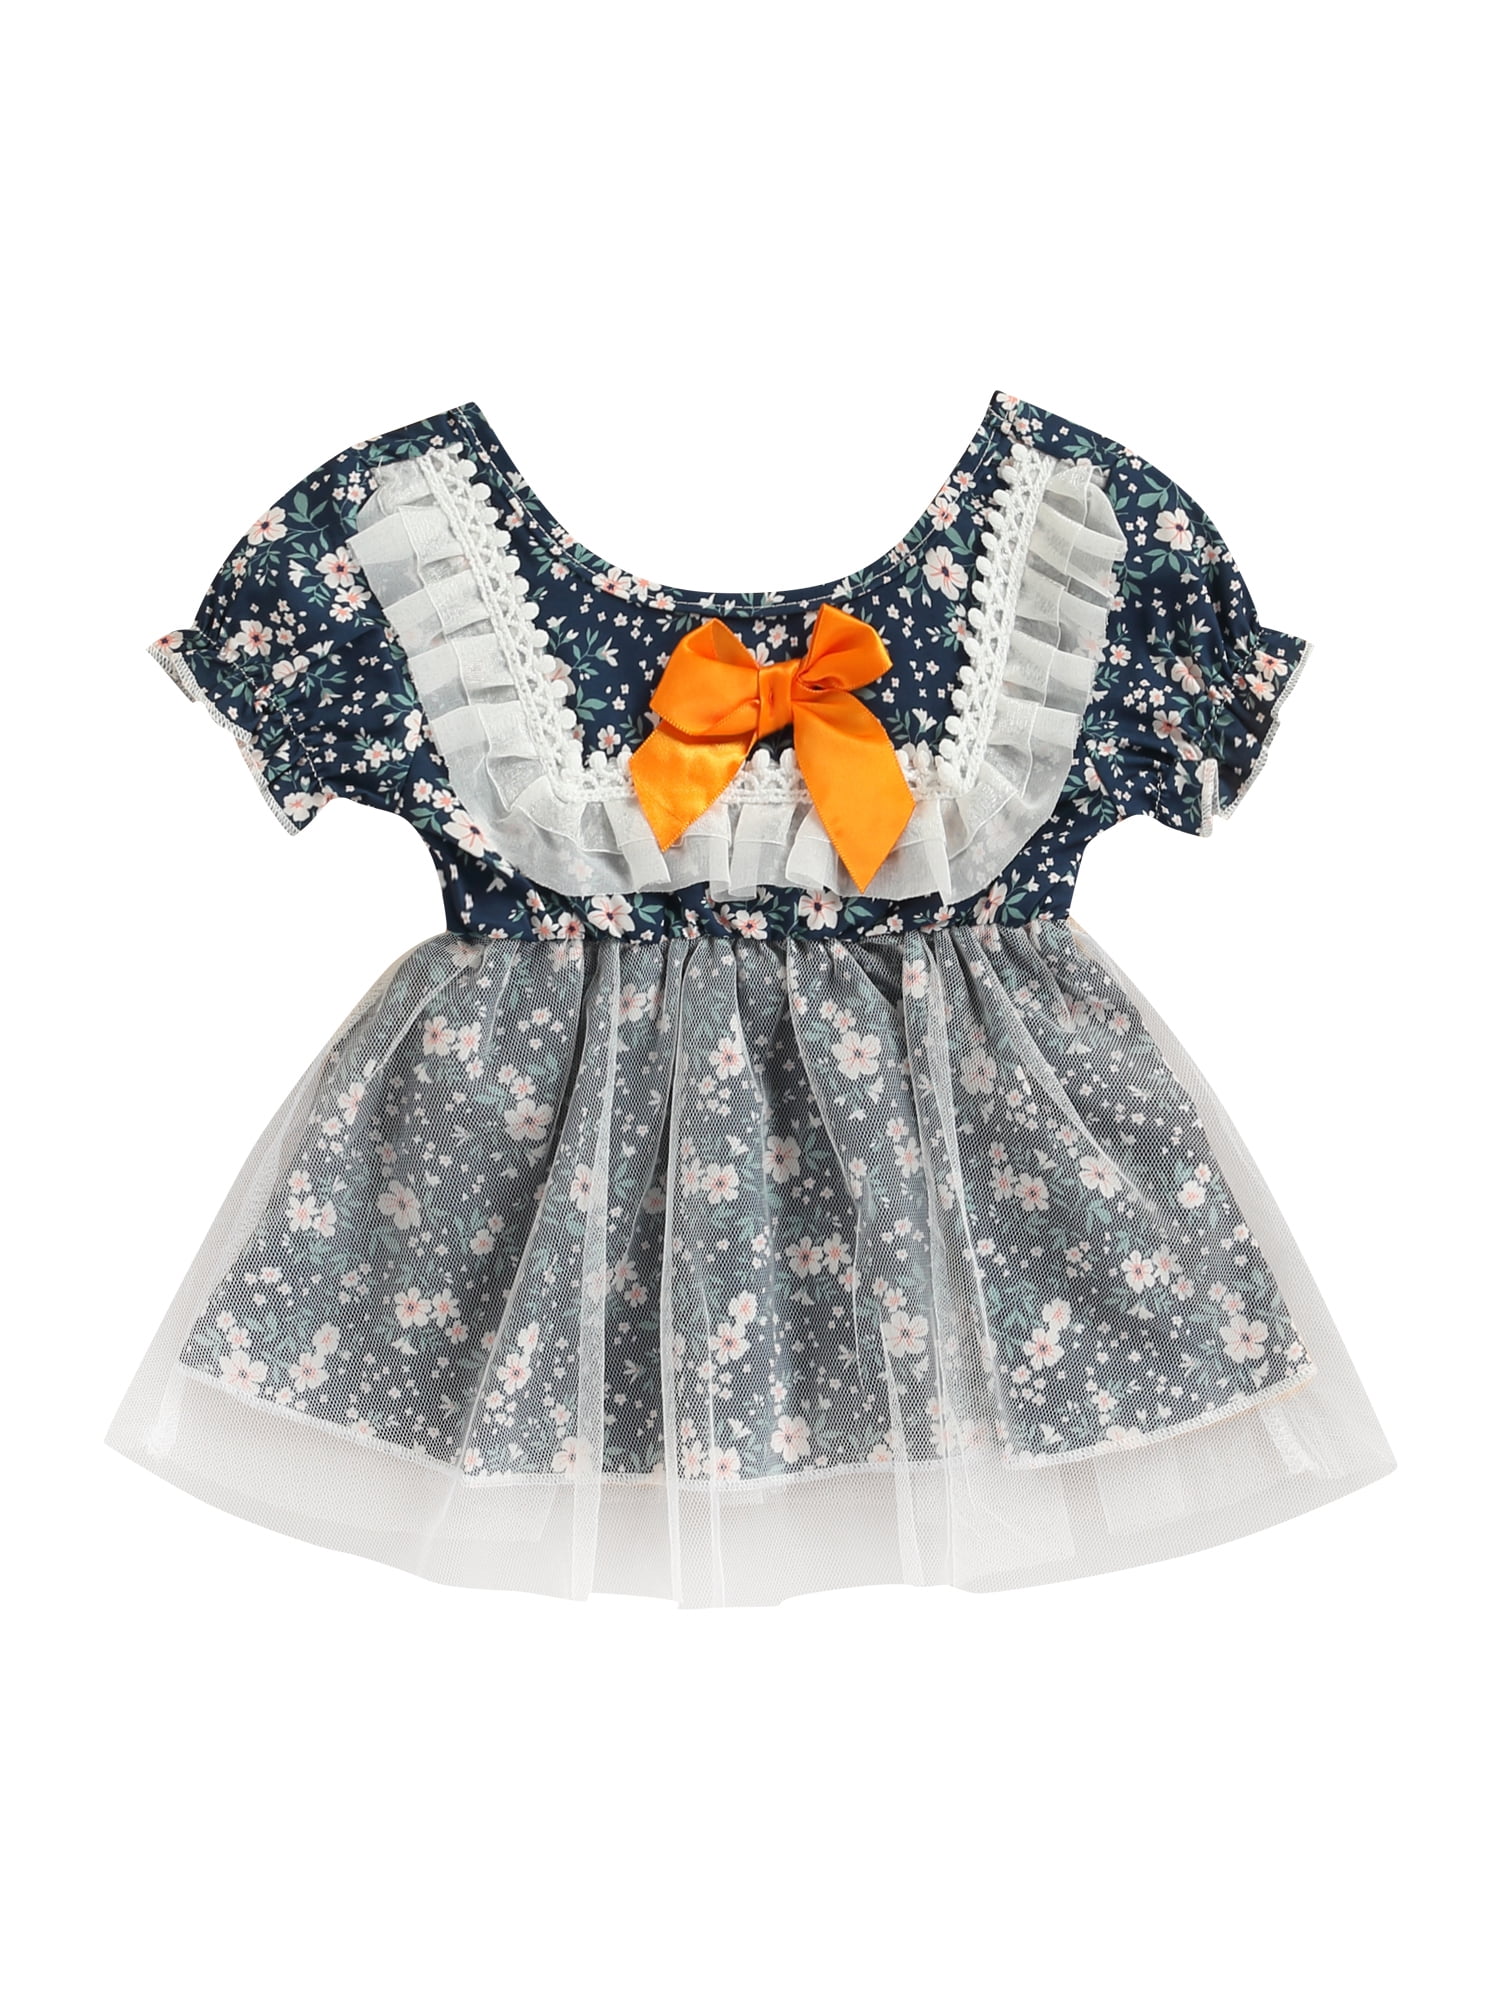 Babys Girl Dress Spanish Style set striped floral Blue Pink 6-12 12-18 18-24 m 